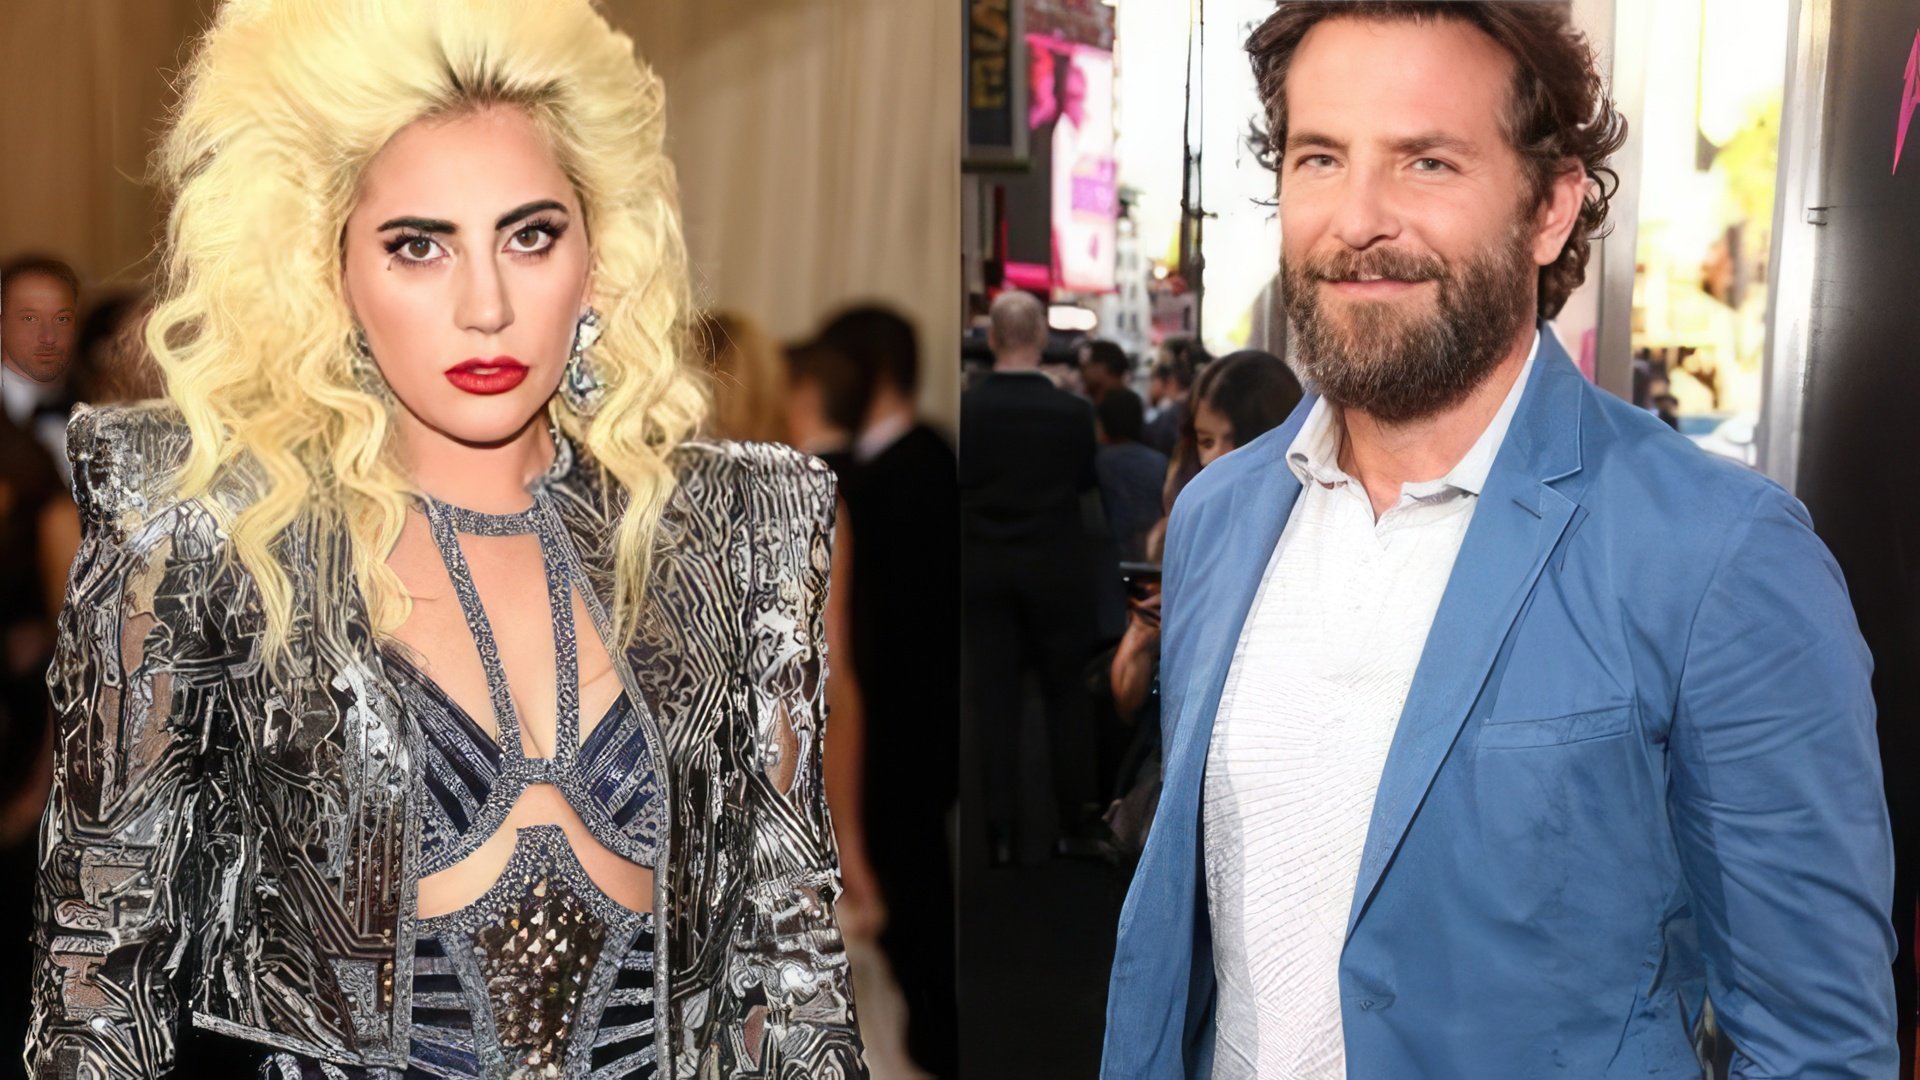 Bradley Cooper and Lady Gaga starred in the same film